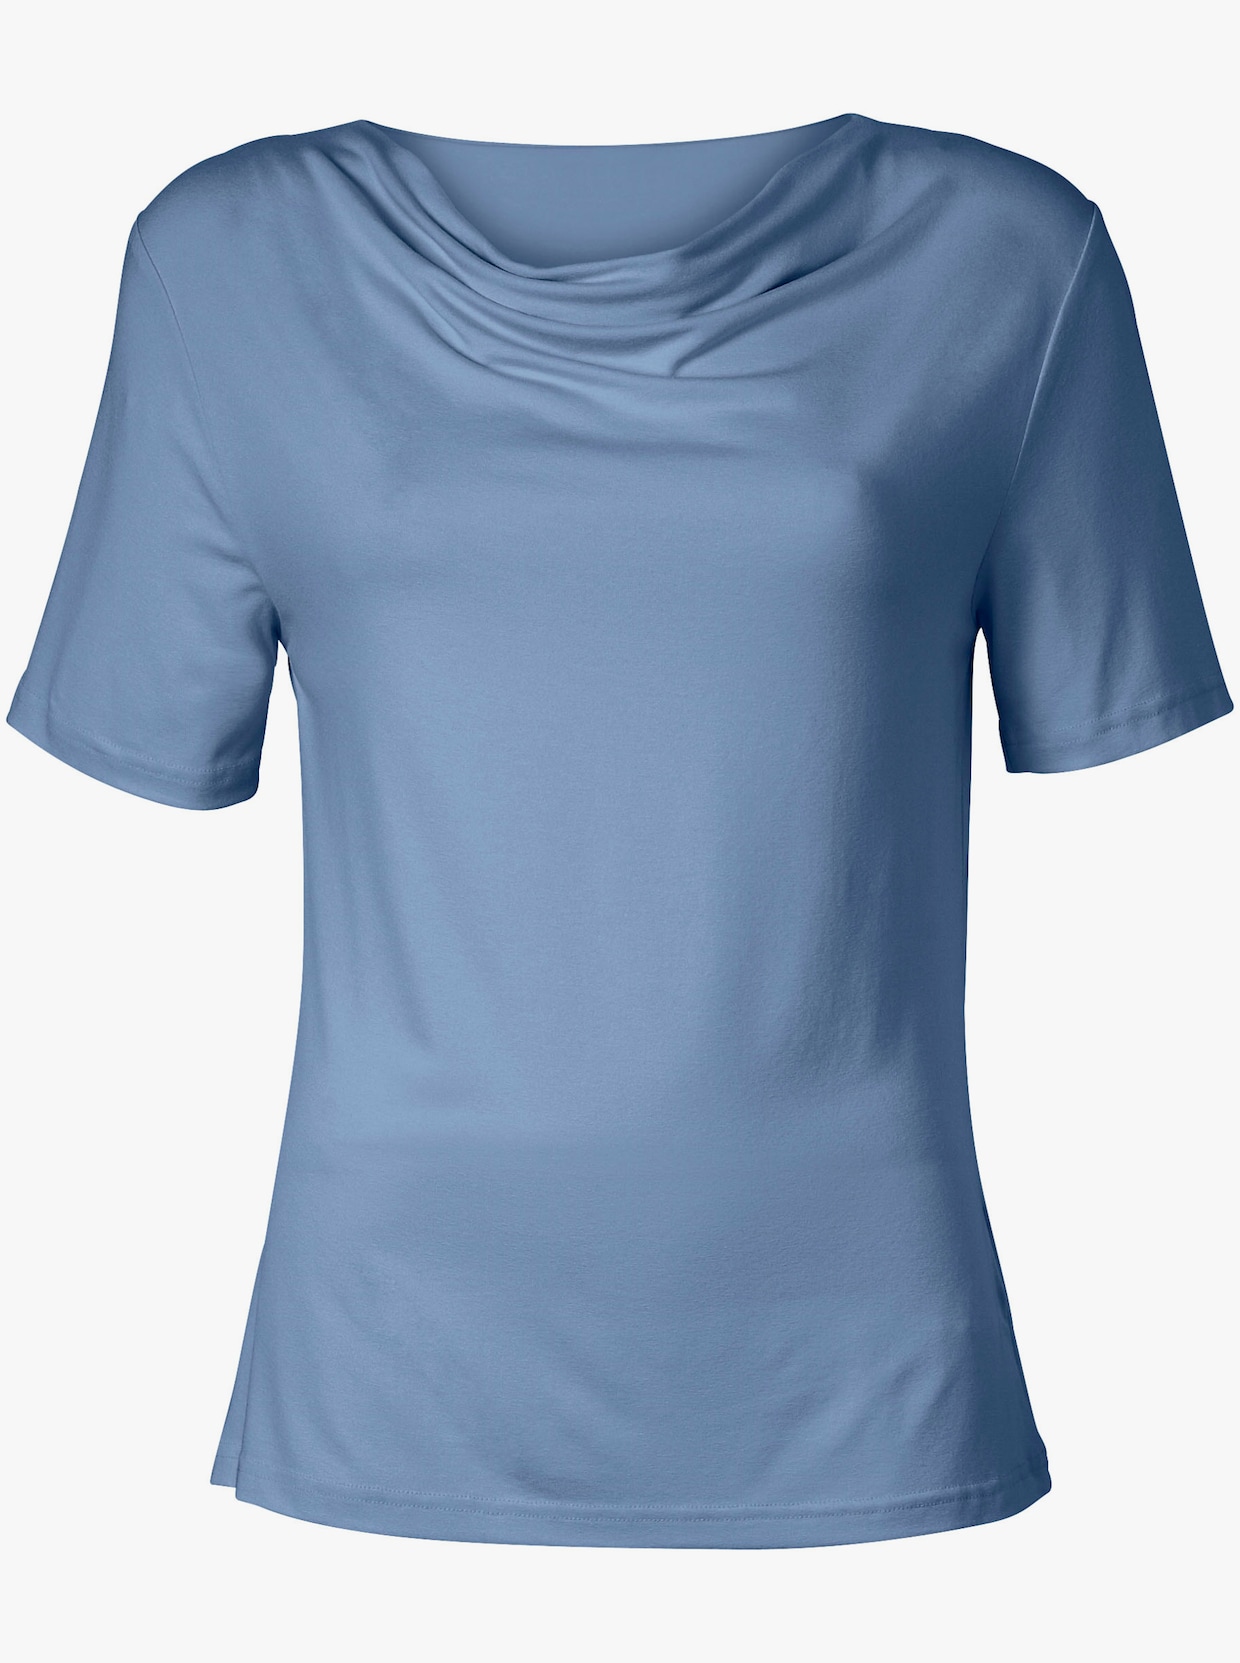 Tričko s řaseným výstřihem - modrá